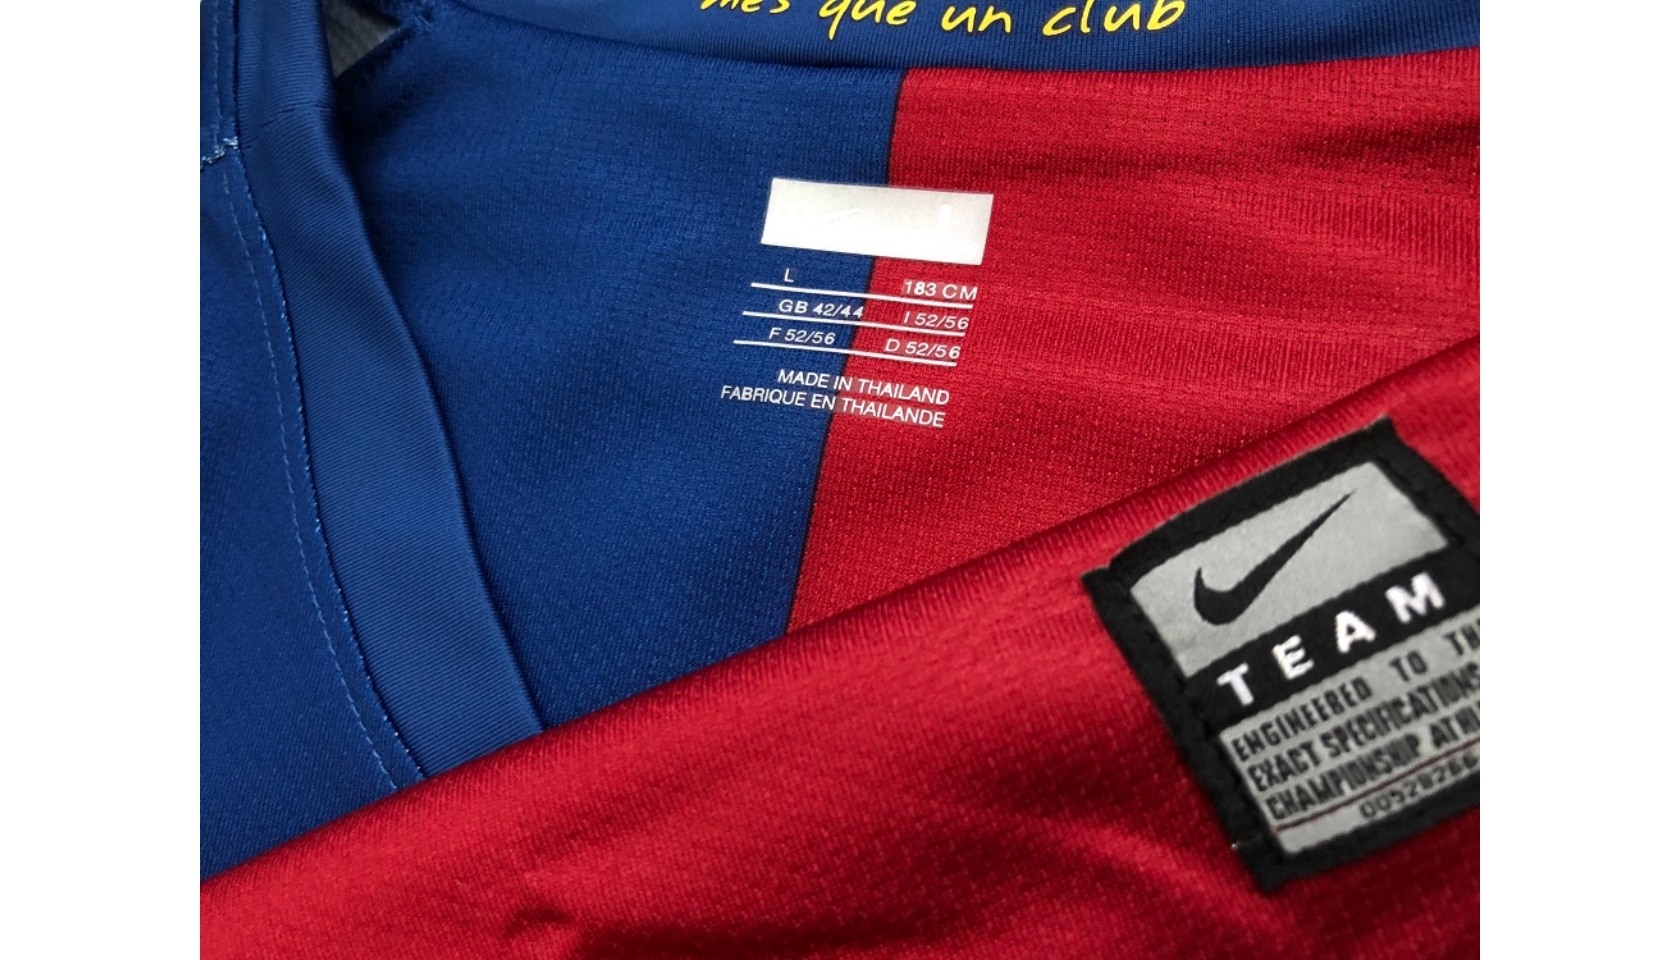 2009-10 Barcelona Match Issue Home Shirt #16 (Busquets) v LA Galaxy